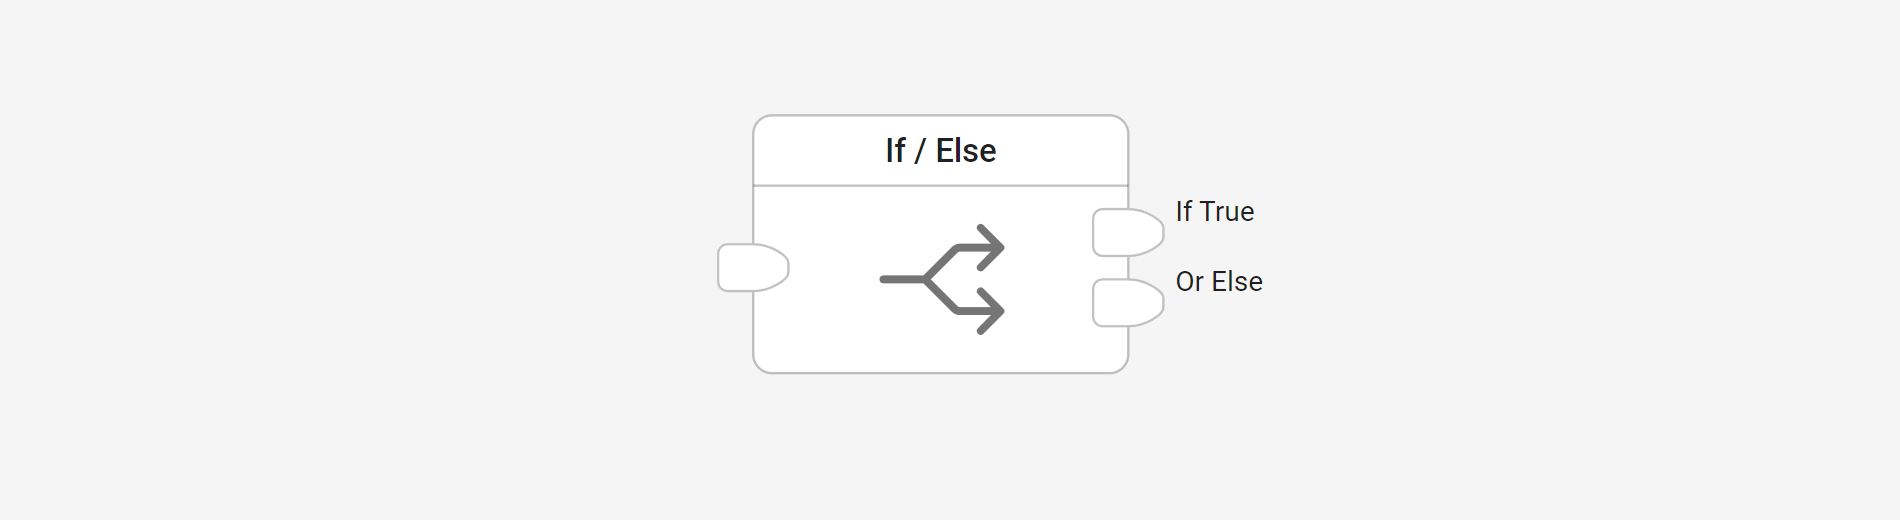 If / Else block in flow editor